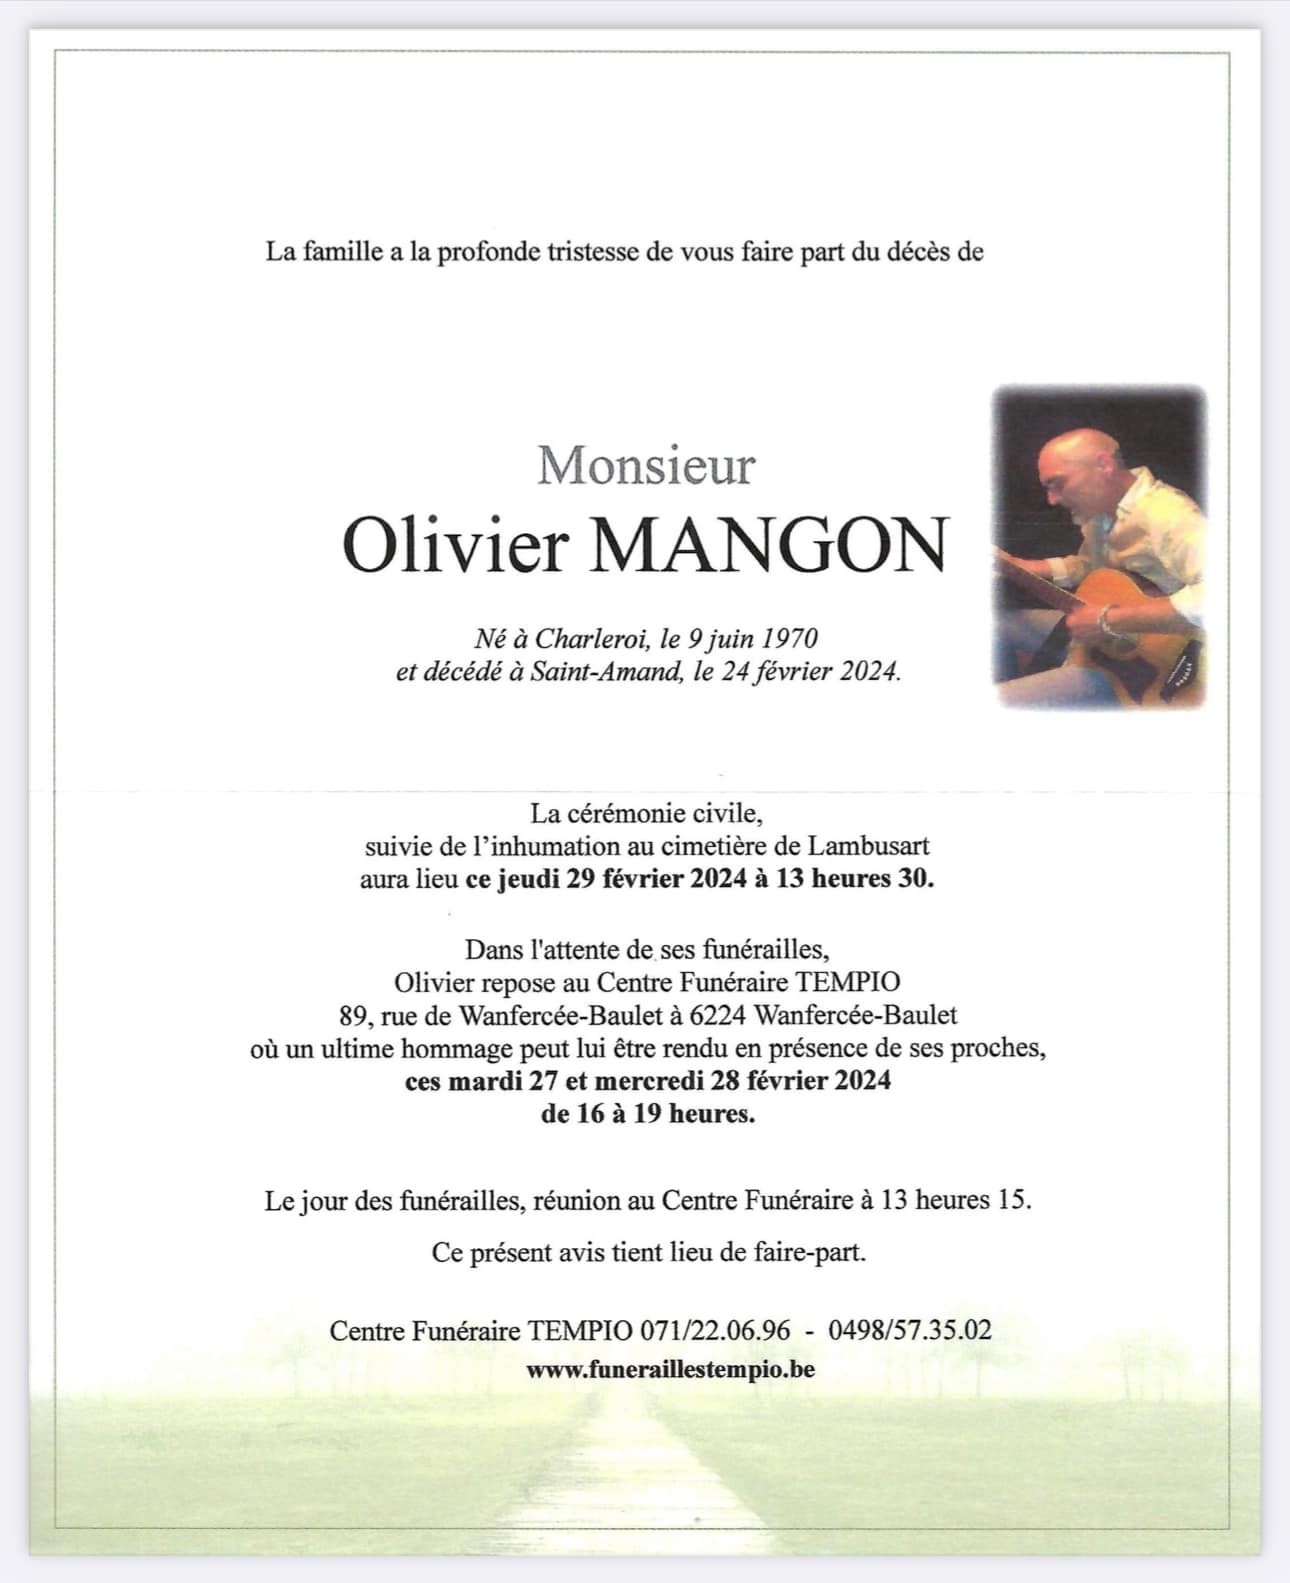 Olivier Mangon